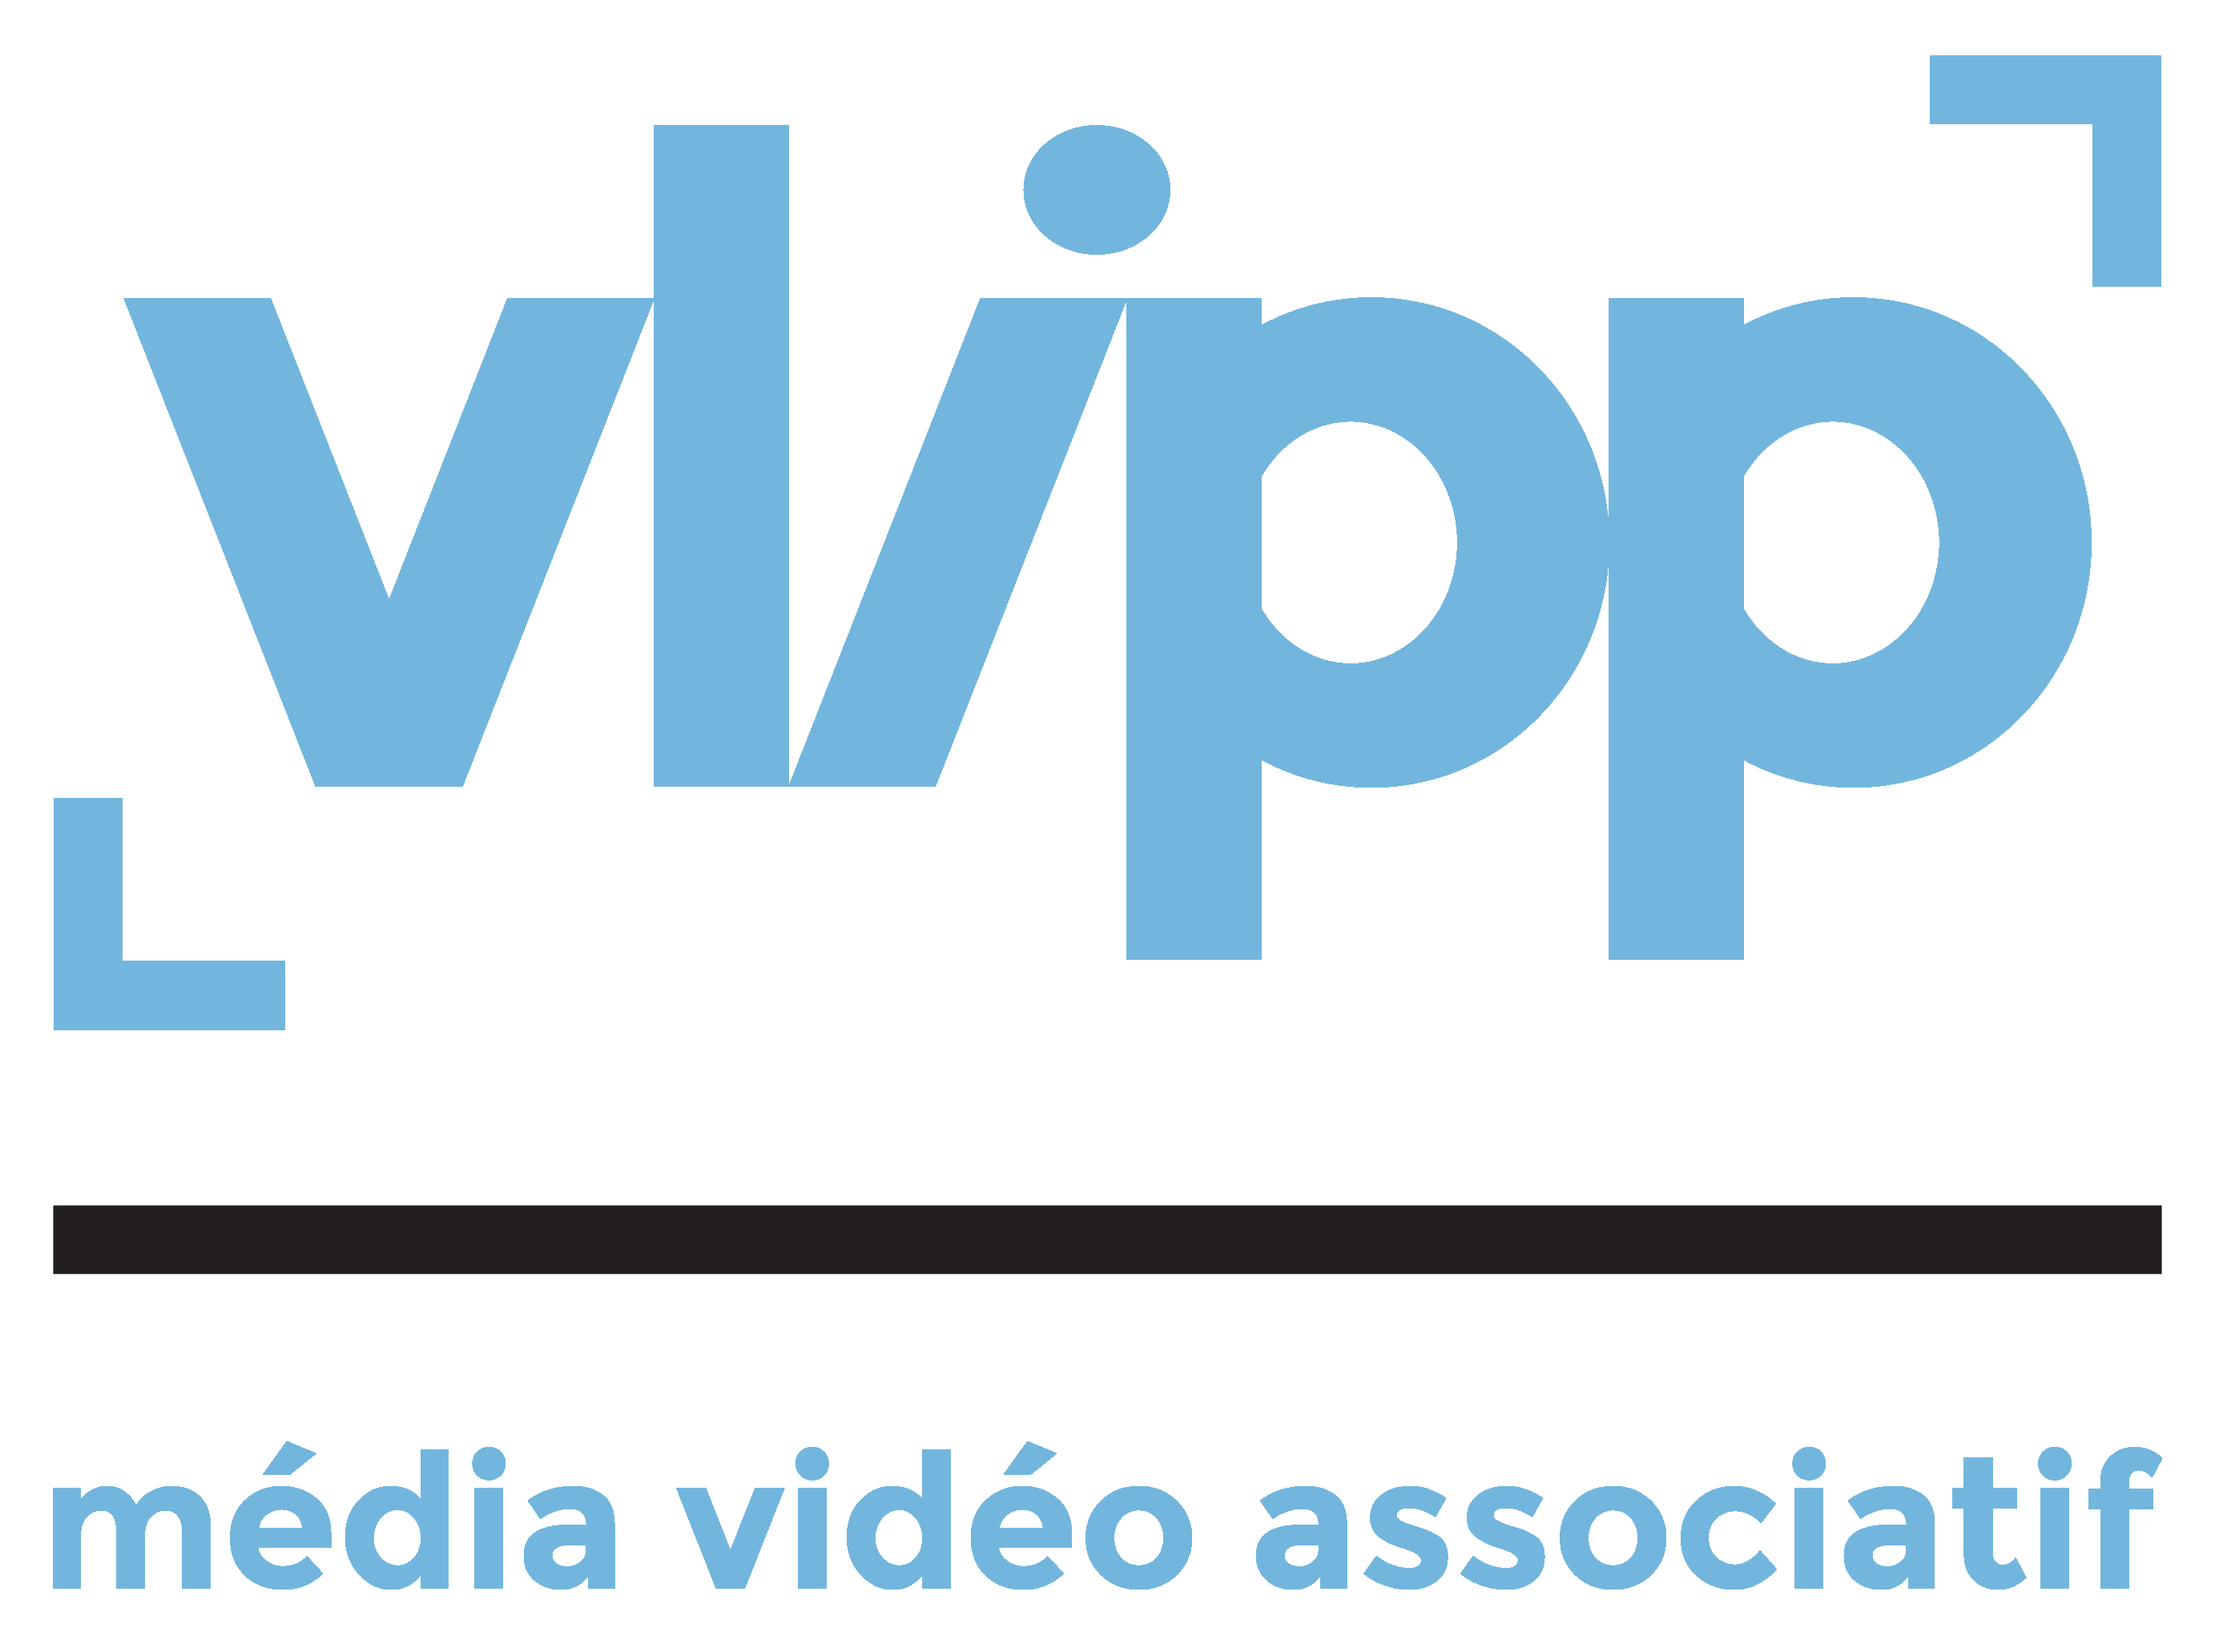 VLIPP